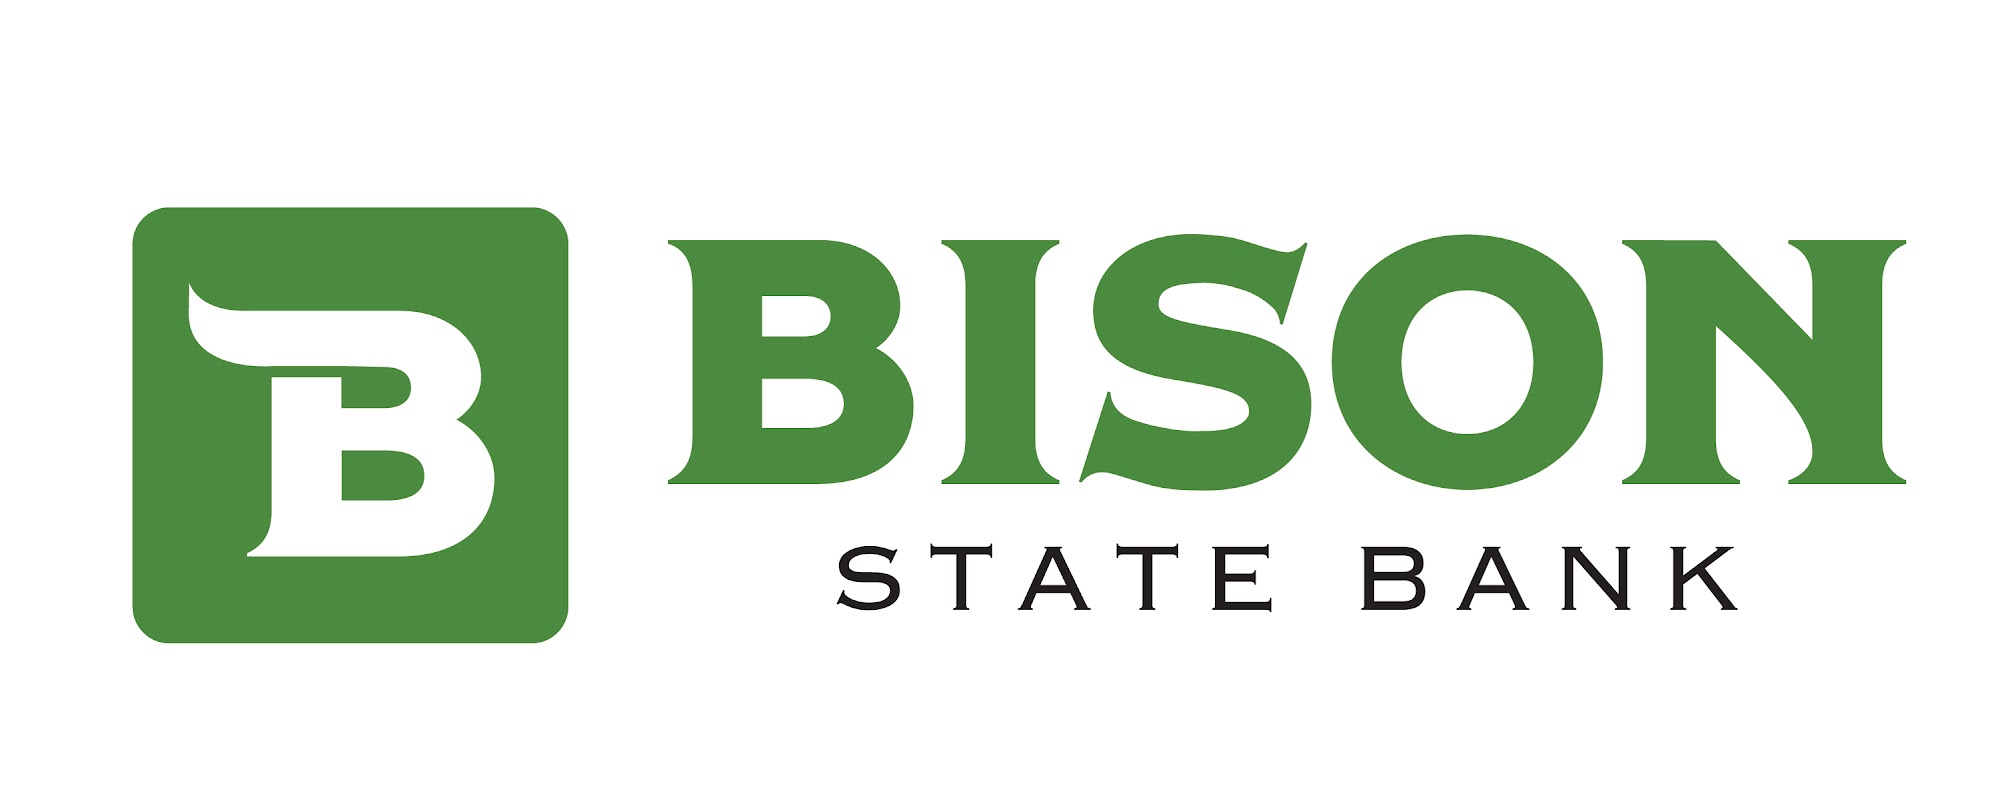 Bison State Bank